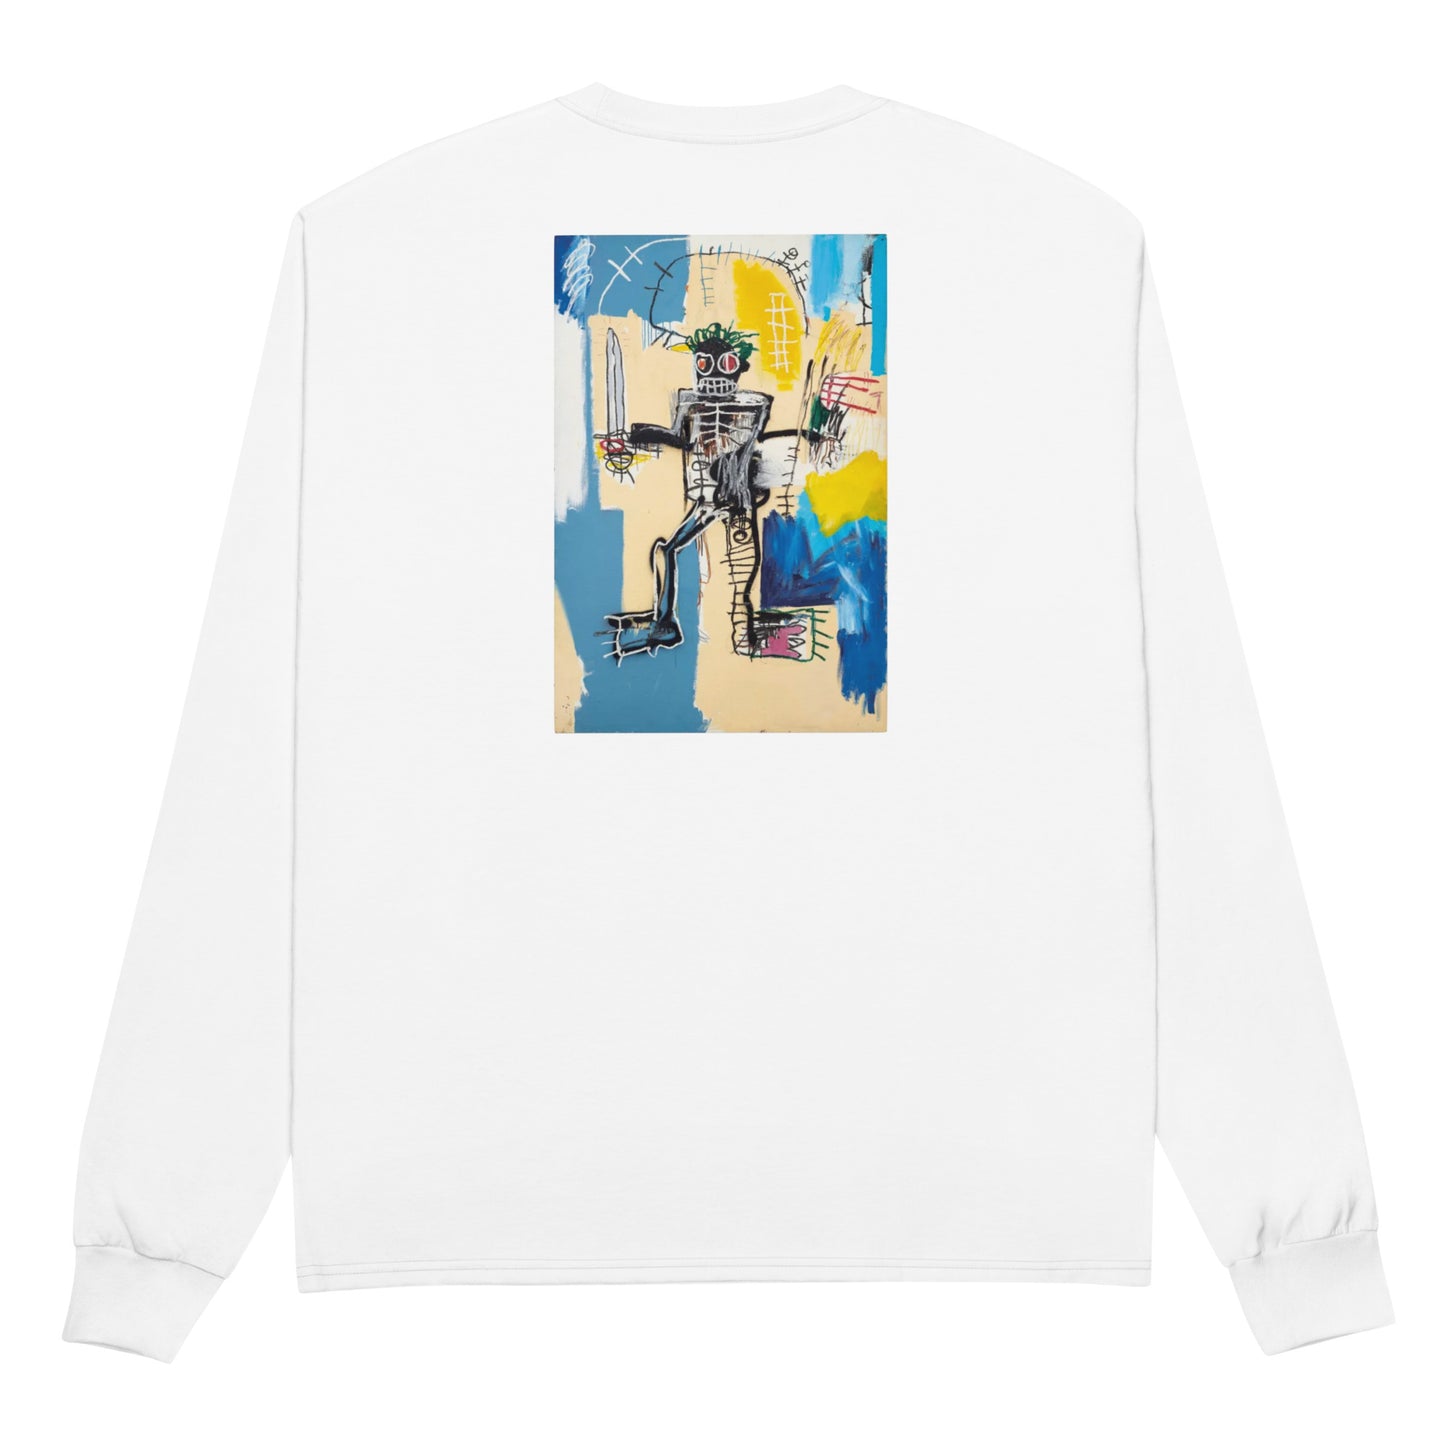 Jean-Michel Basquiat "Warrior" Artwork Embroidered + Printed Premium Champion Streetwear Long Sleeve Shirt White